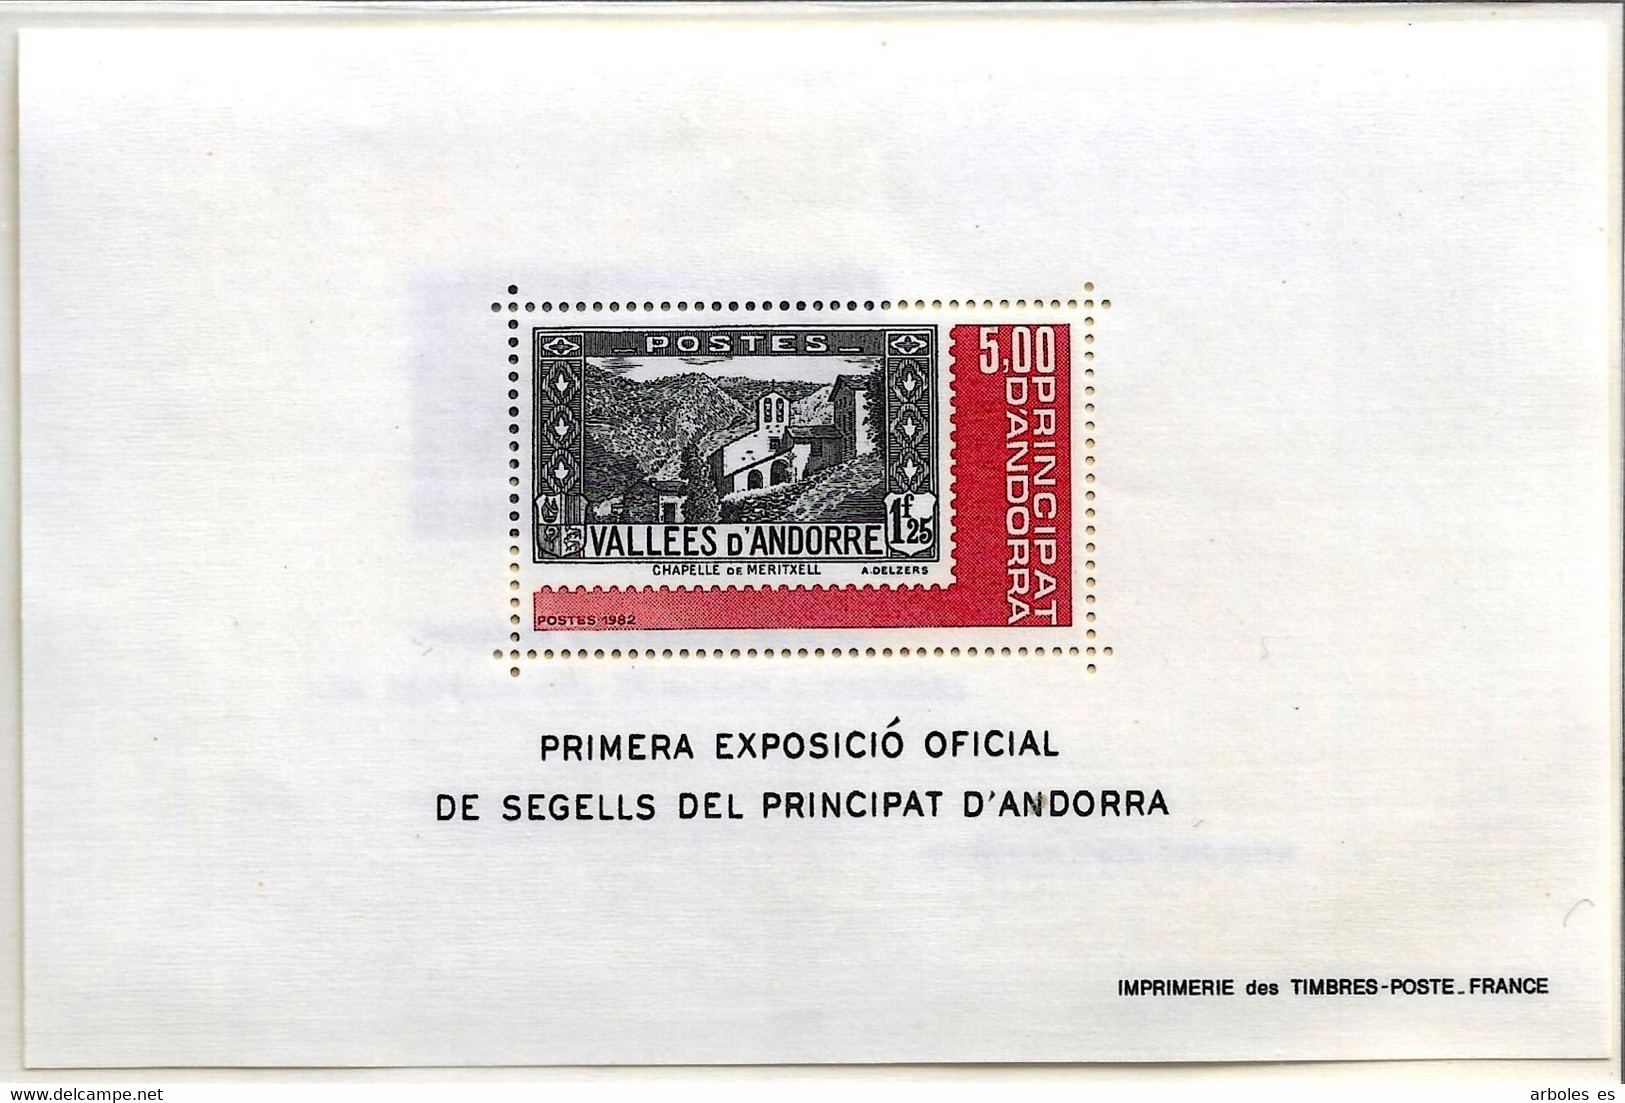 ANDORRA FRANCESA - EXPOSICION FALATELICA - AÑO 1982 - Nº CATALOGO YVERT 0001 - NUEVOS - Blokken & Velletjes